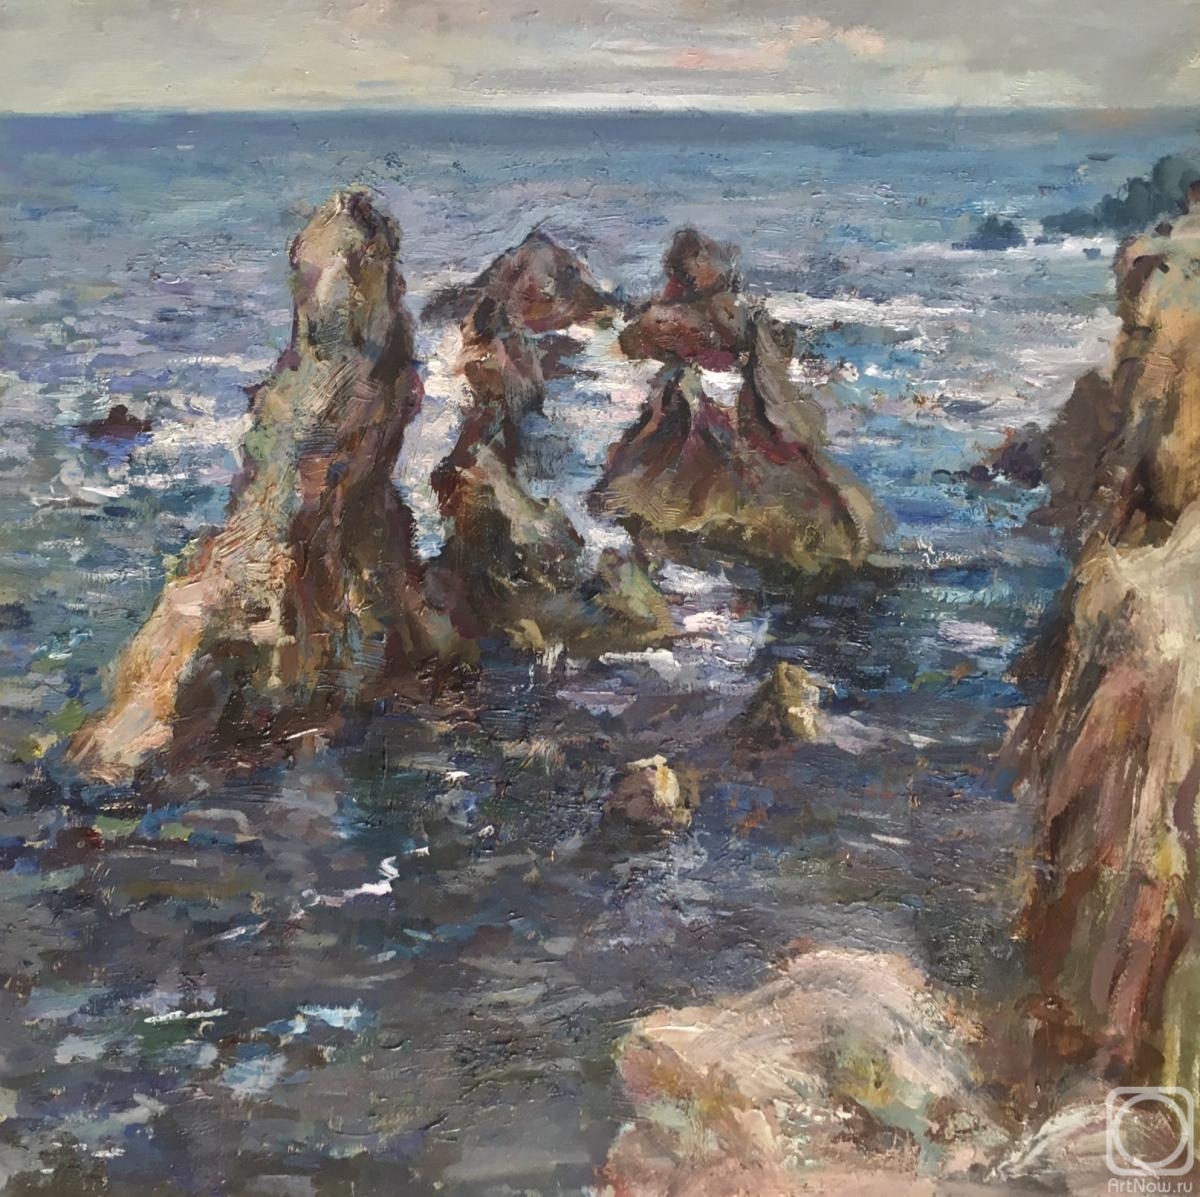 Zhmurko Anton. Rocks of Port-Katon (free copy of the work of Pavel Kuznetsov)